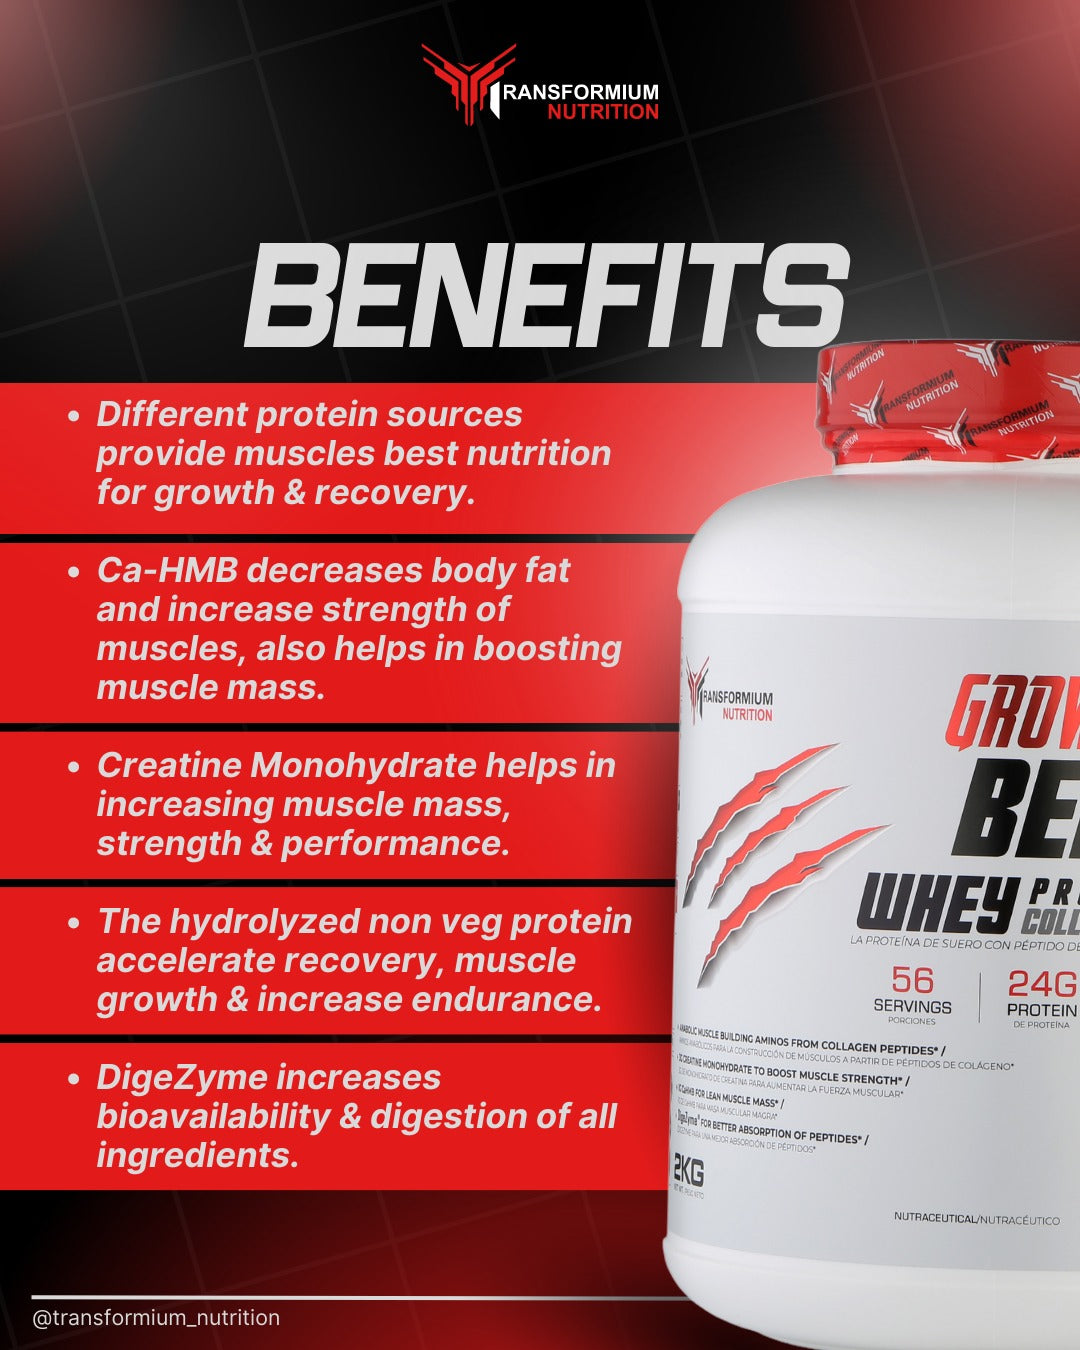 Grow Pro Beast (95% Hydrolyzed Bovinae Protein + Whey Protein)